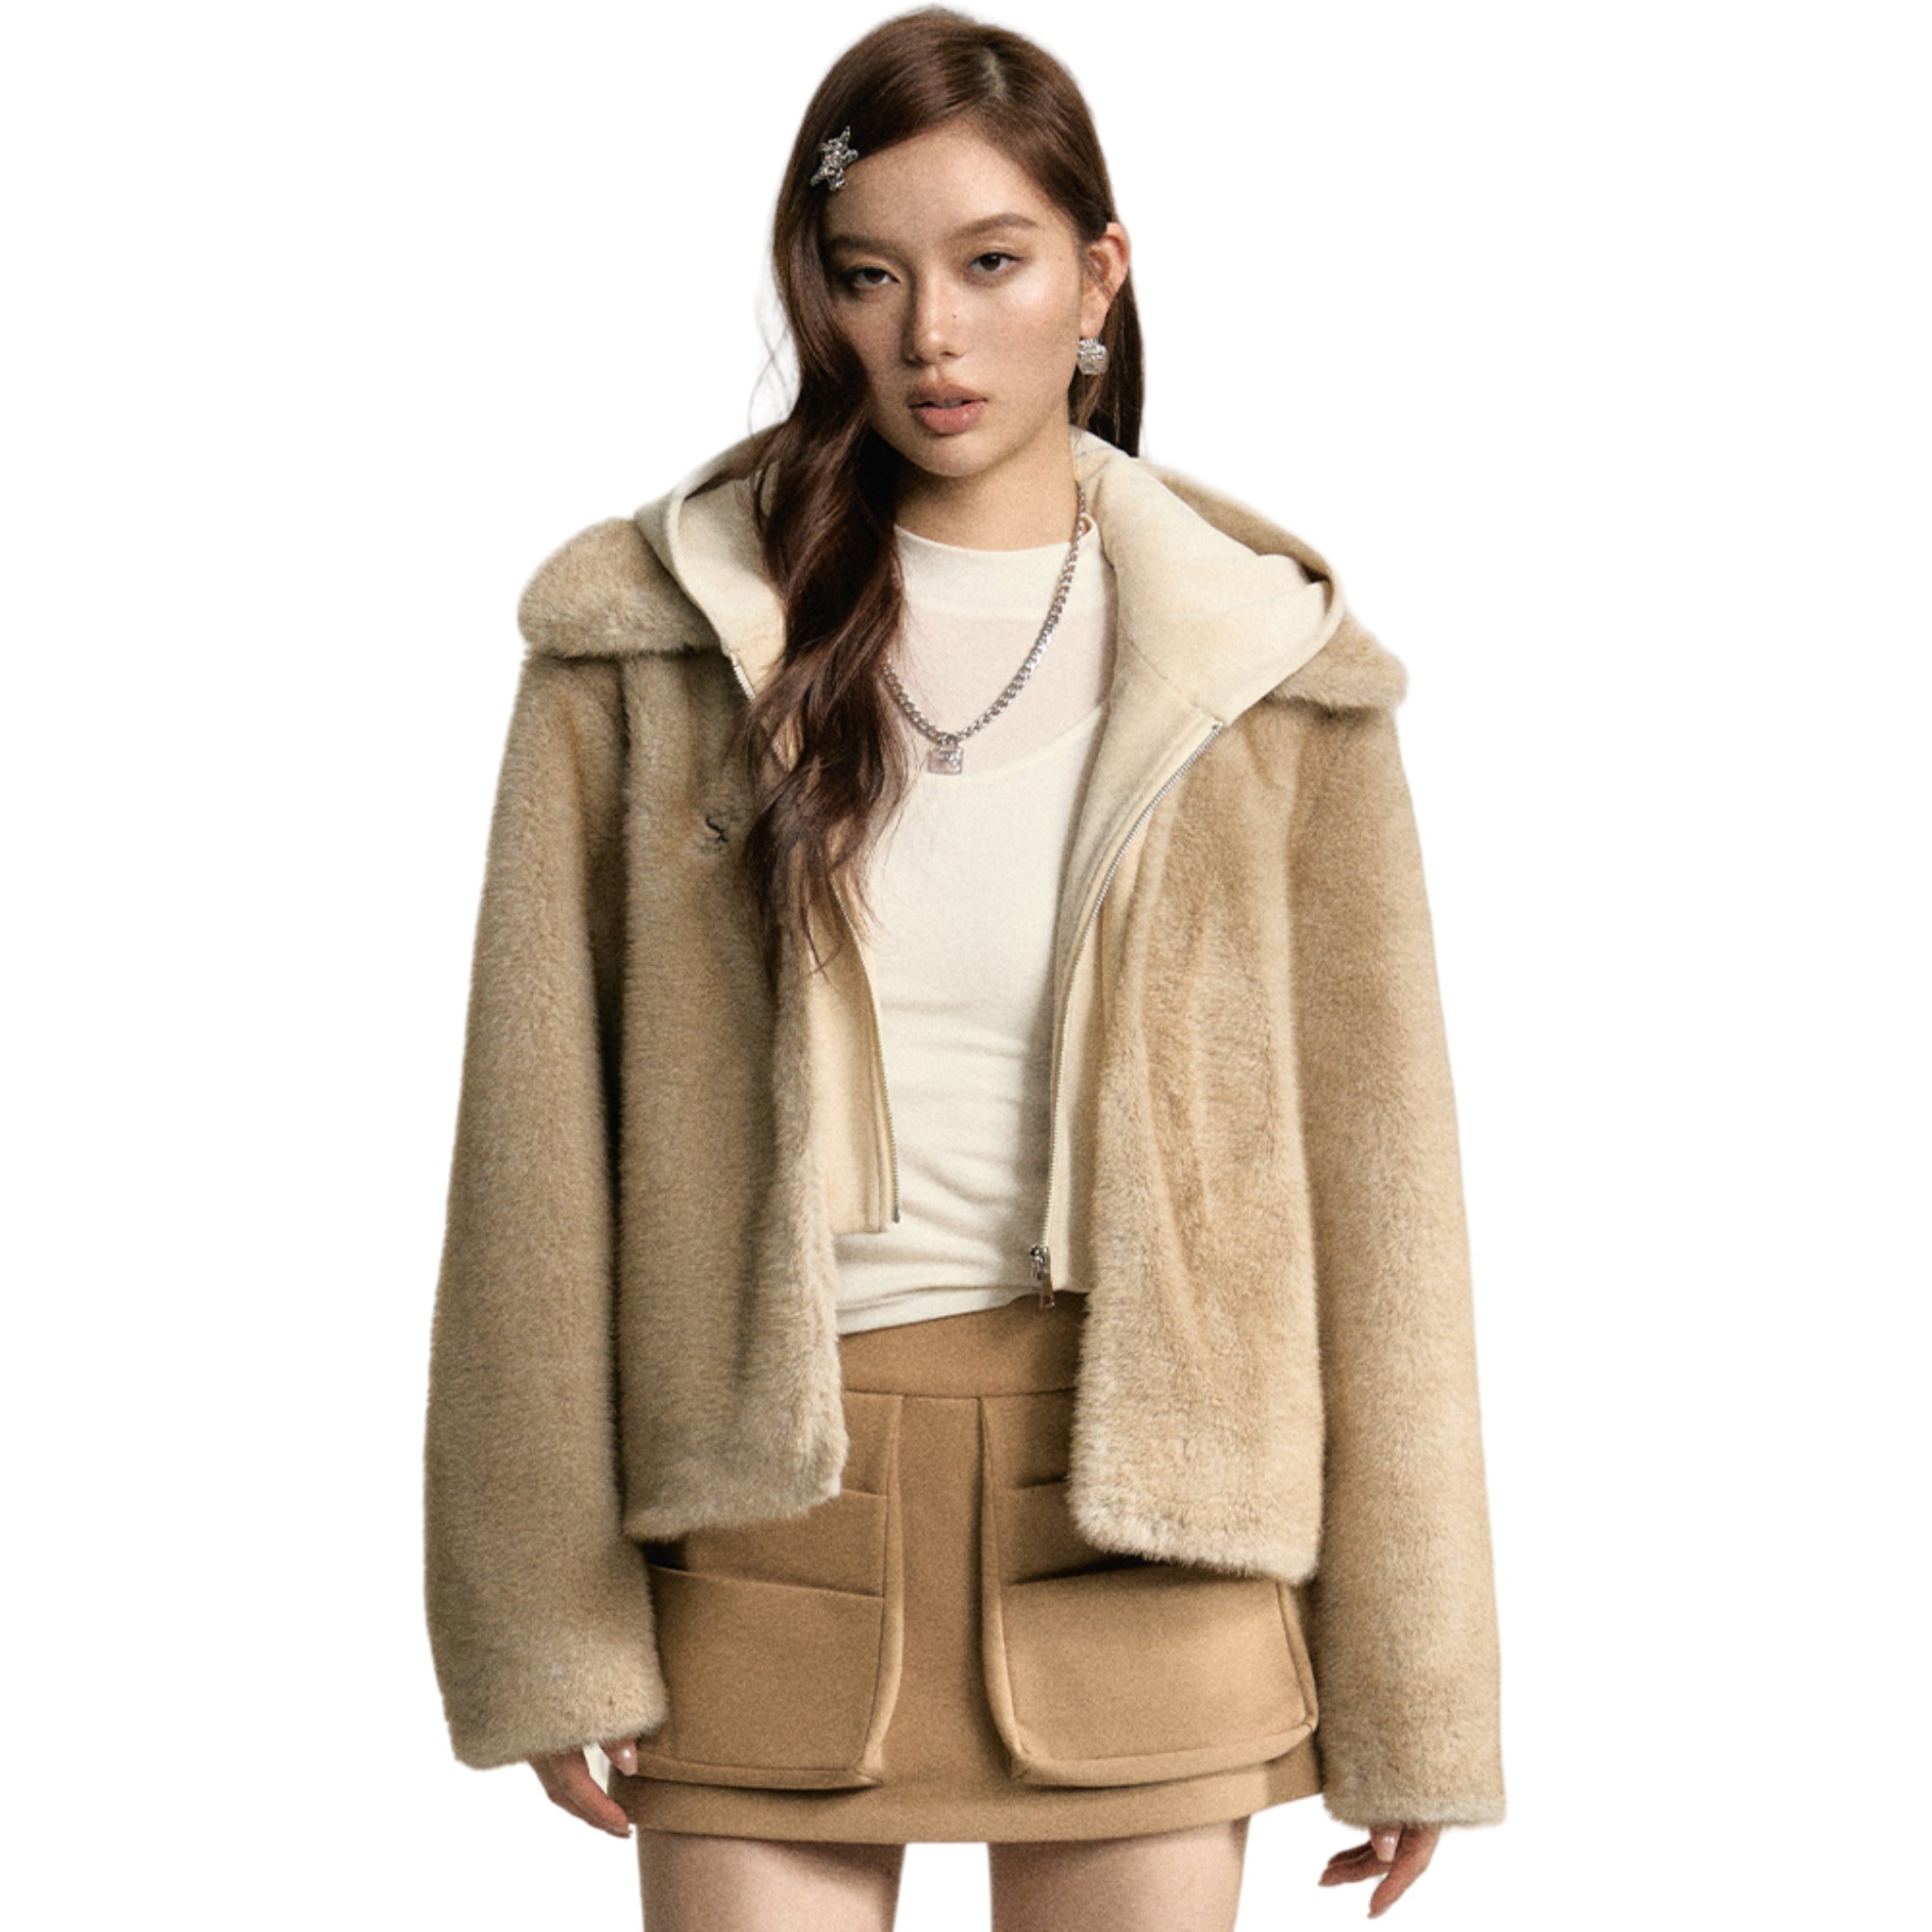 SOMESOWE Beige Faux Fur Two Piece Coat | MADA IN CHINA